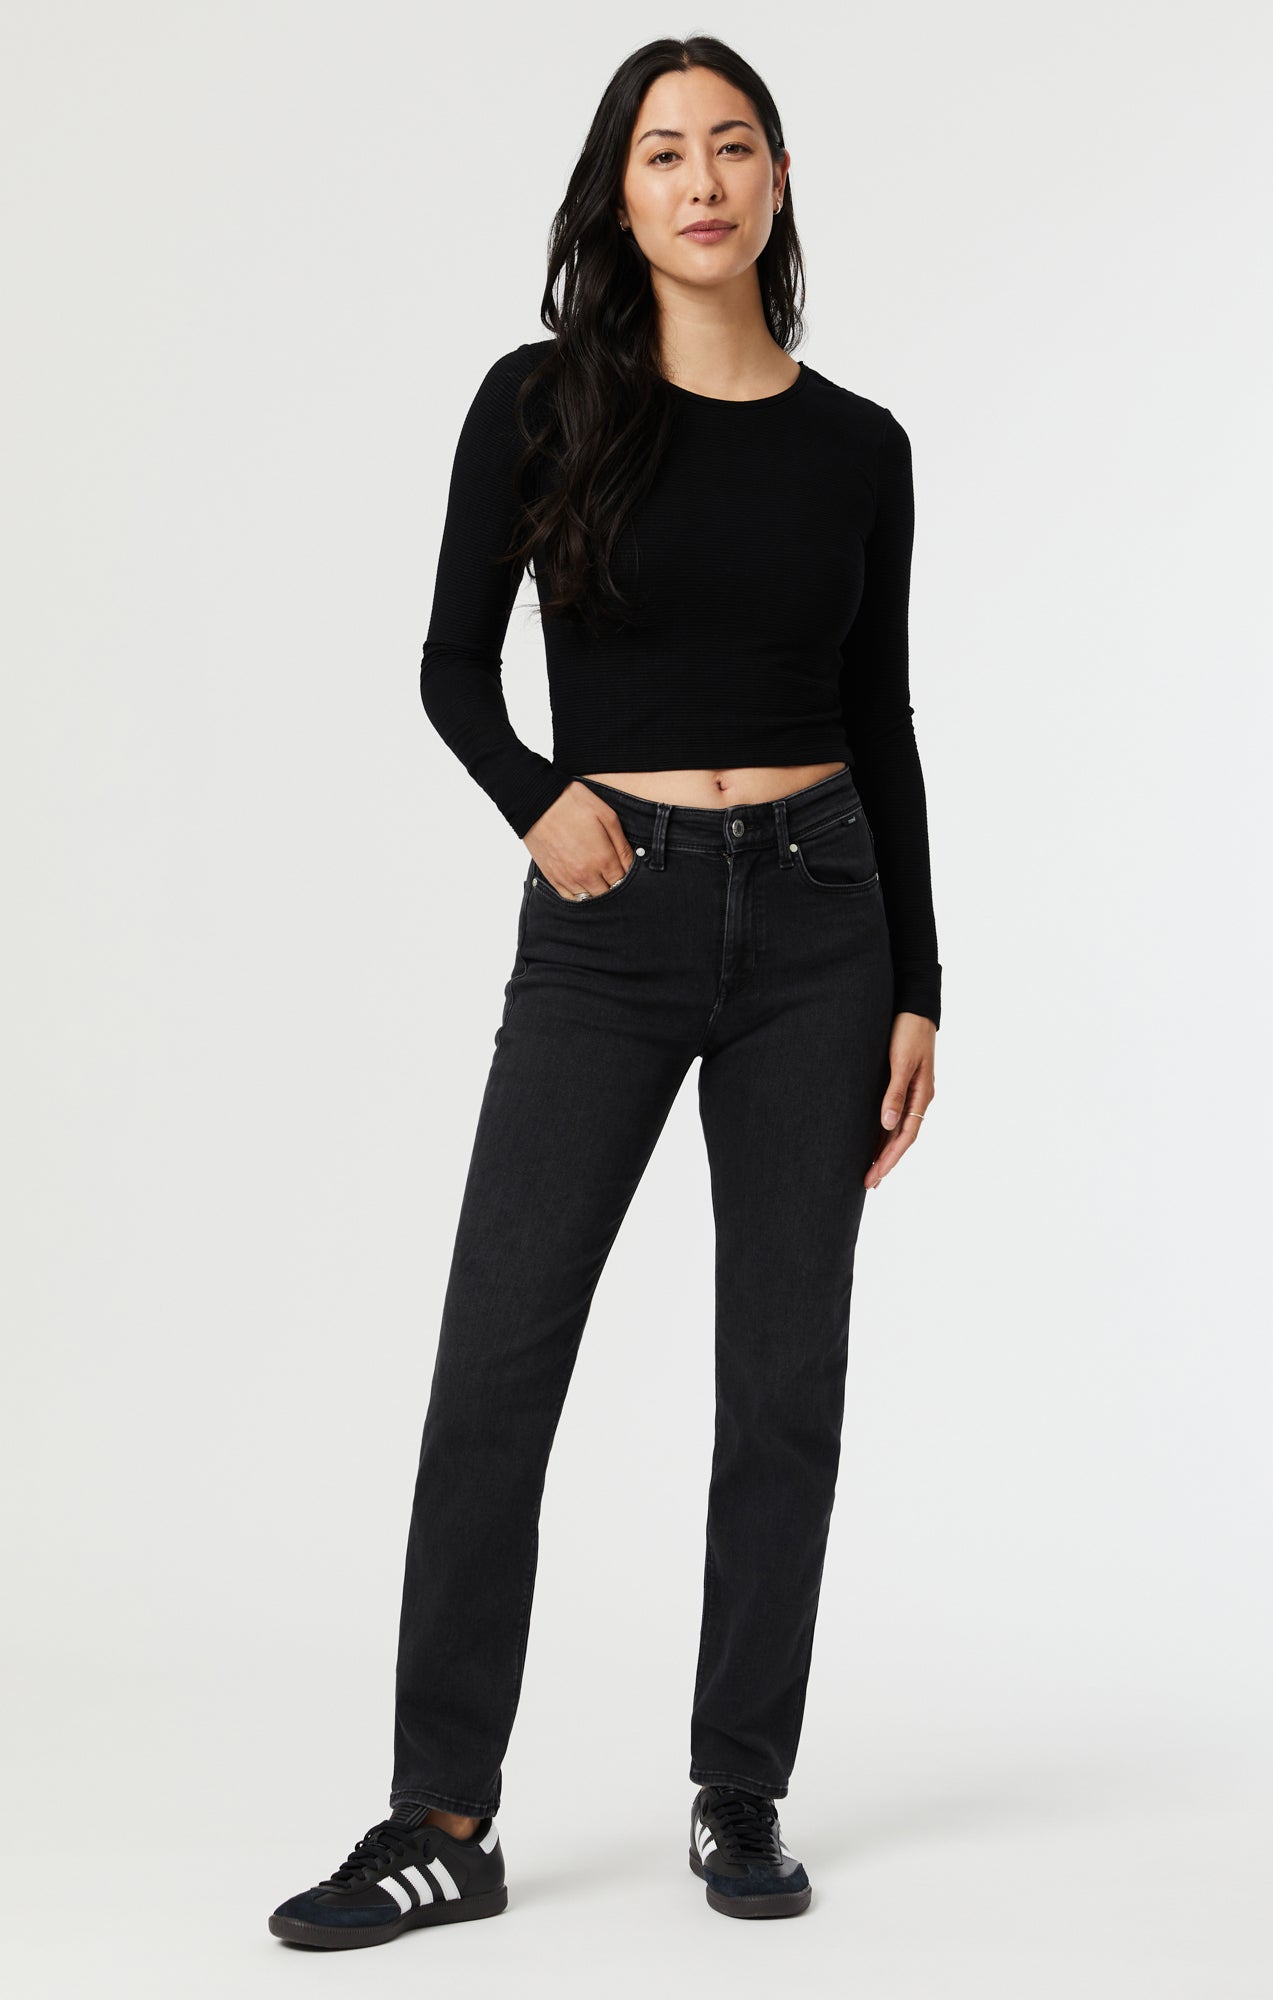 Black Jeans for Women, Womens Black Jeans